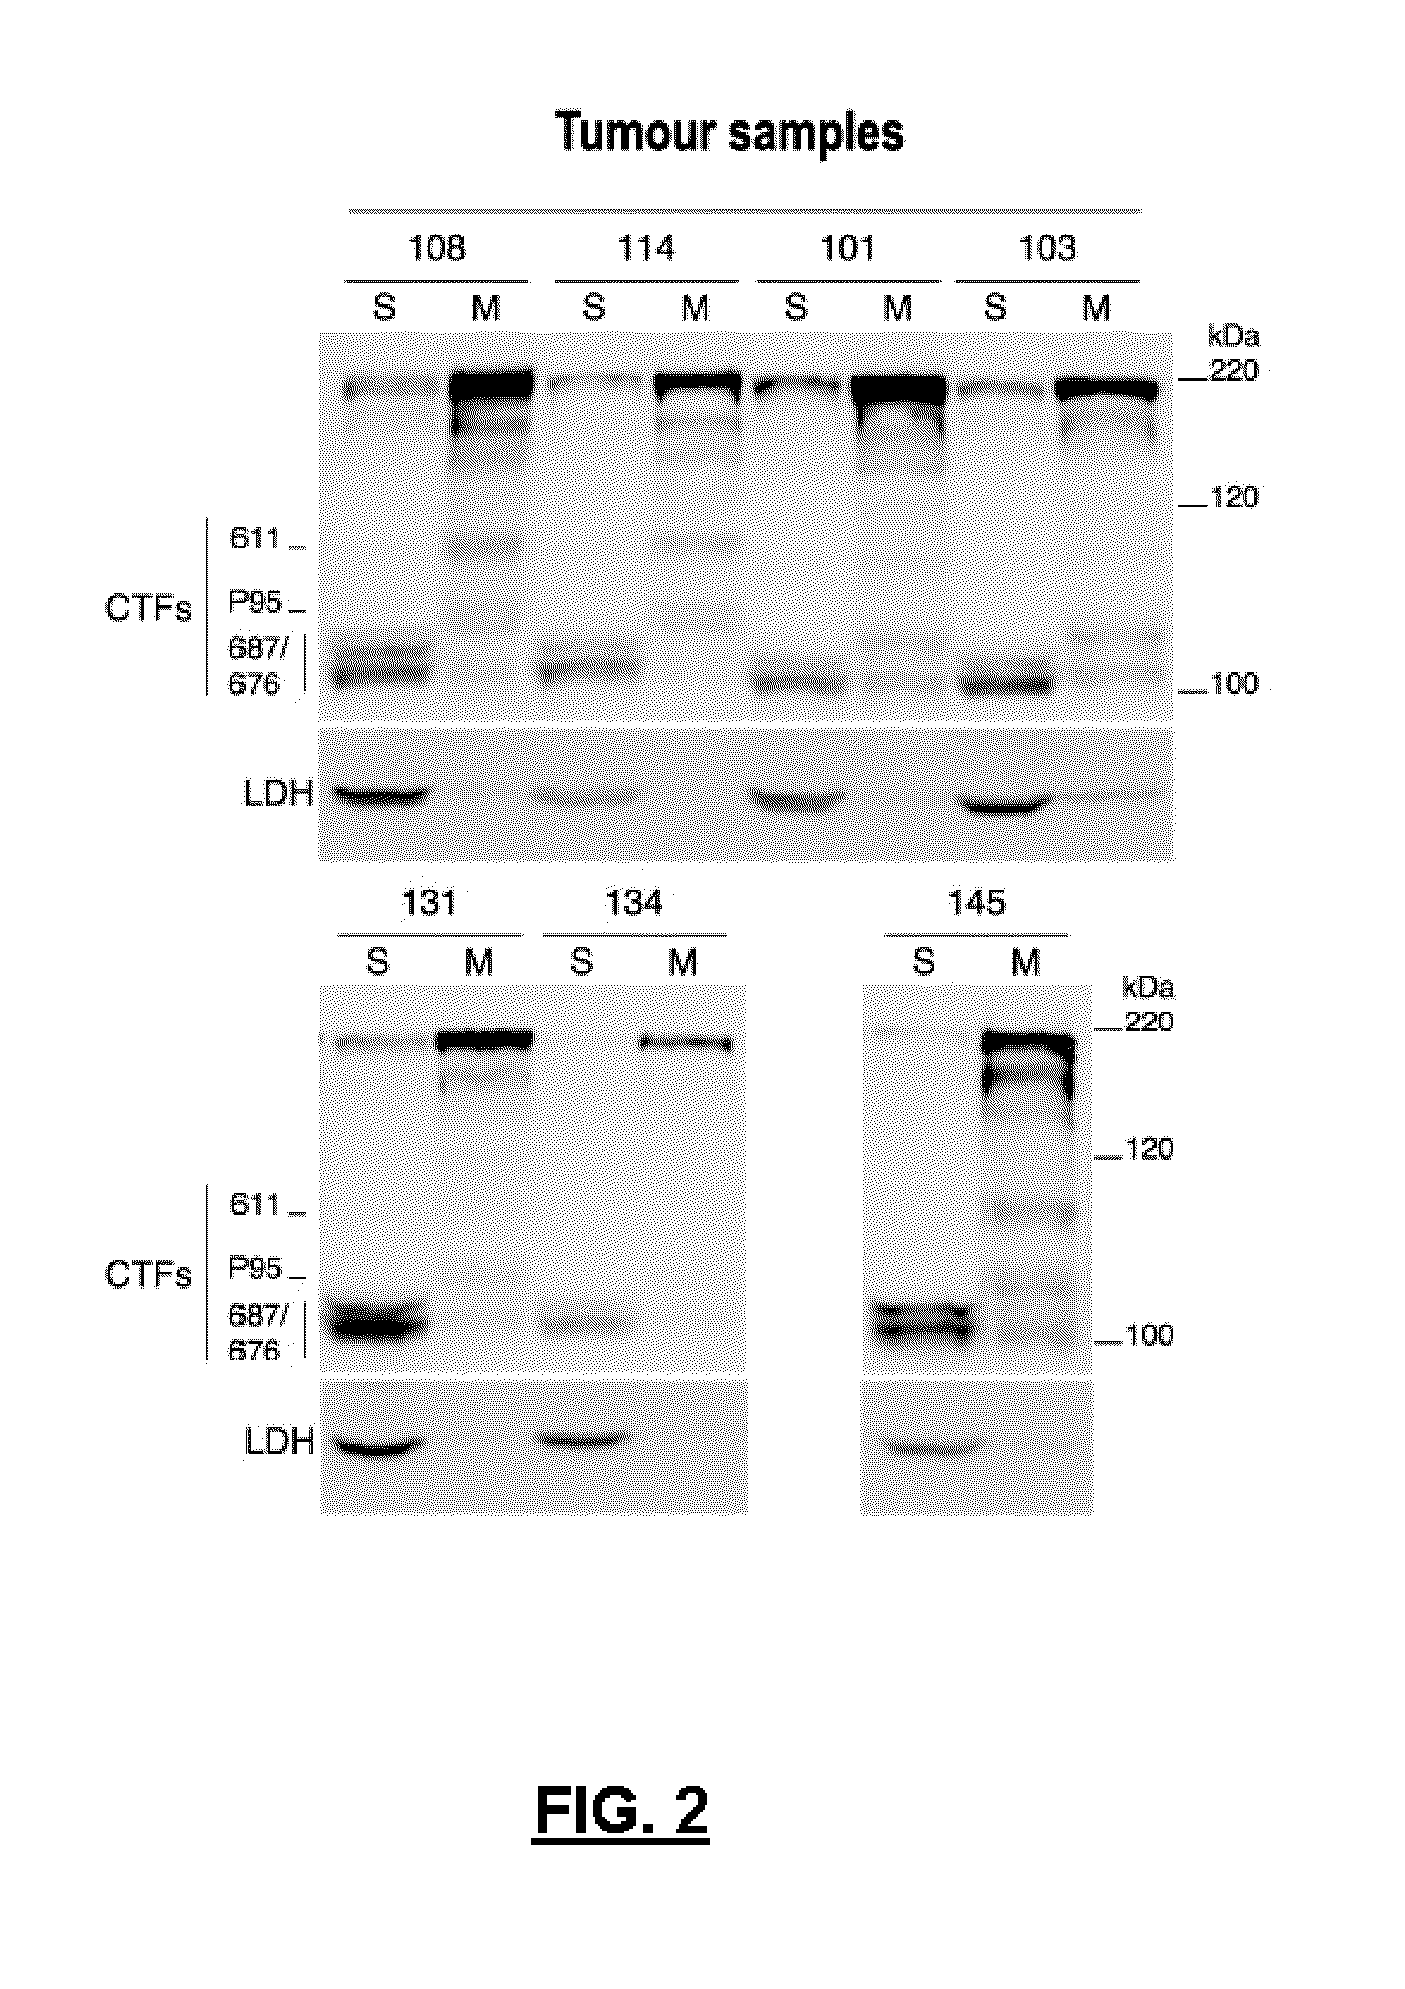 Antibodies against HER2 truncated variant CTF-611